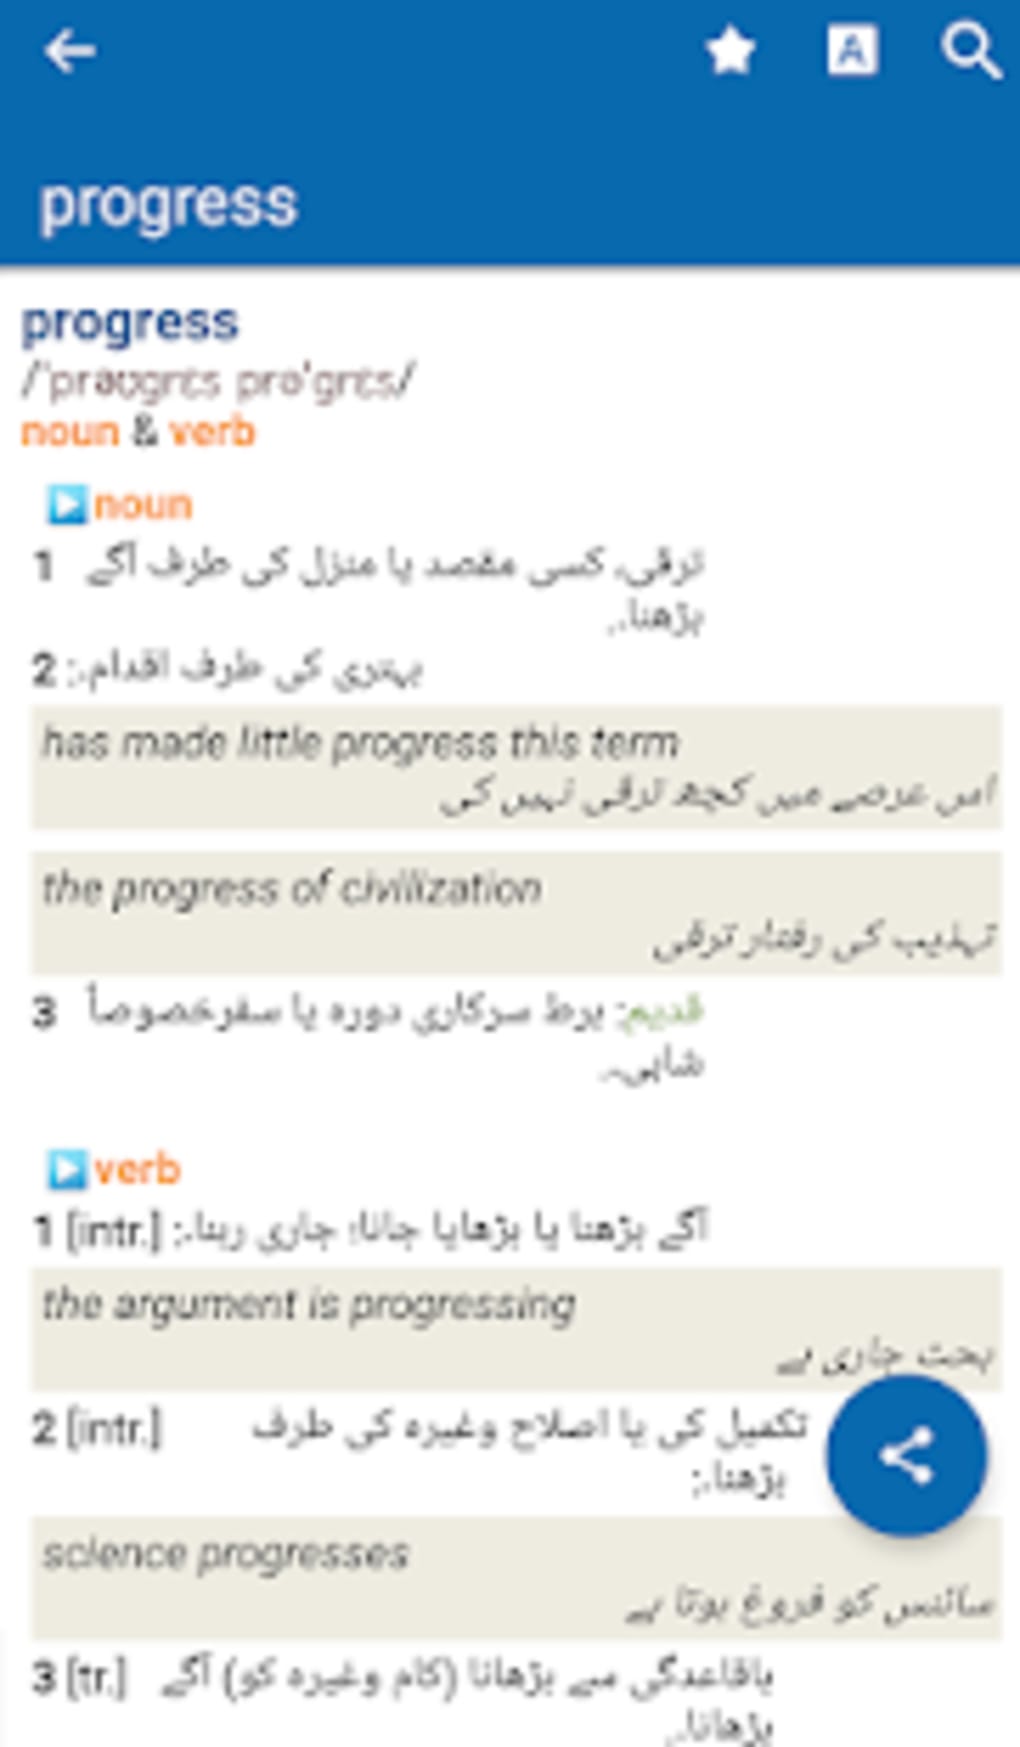 Little Oxford English-Urdu Dictionary